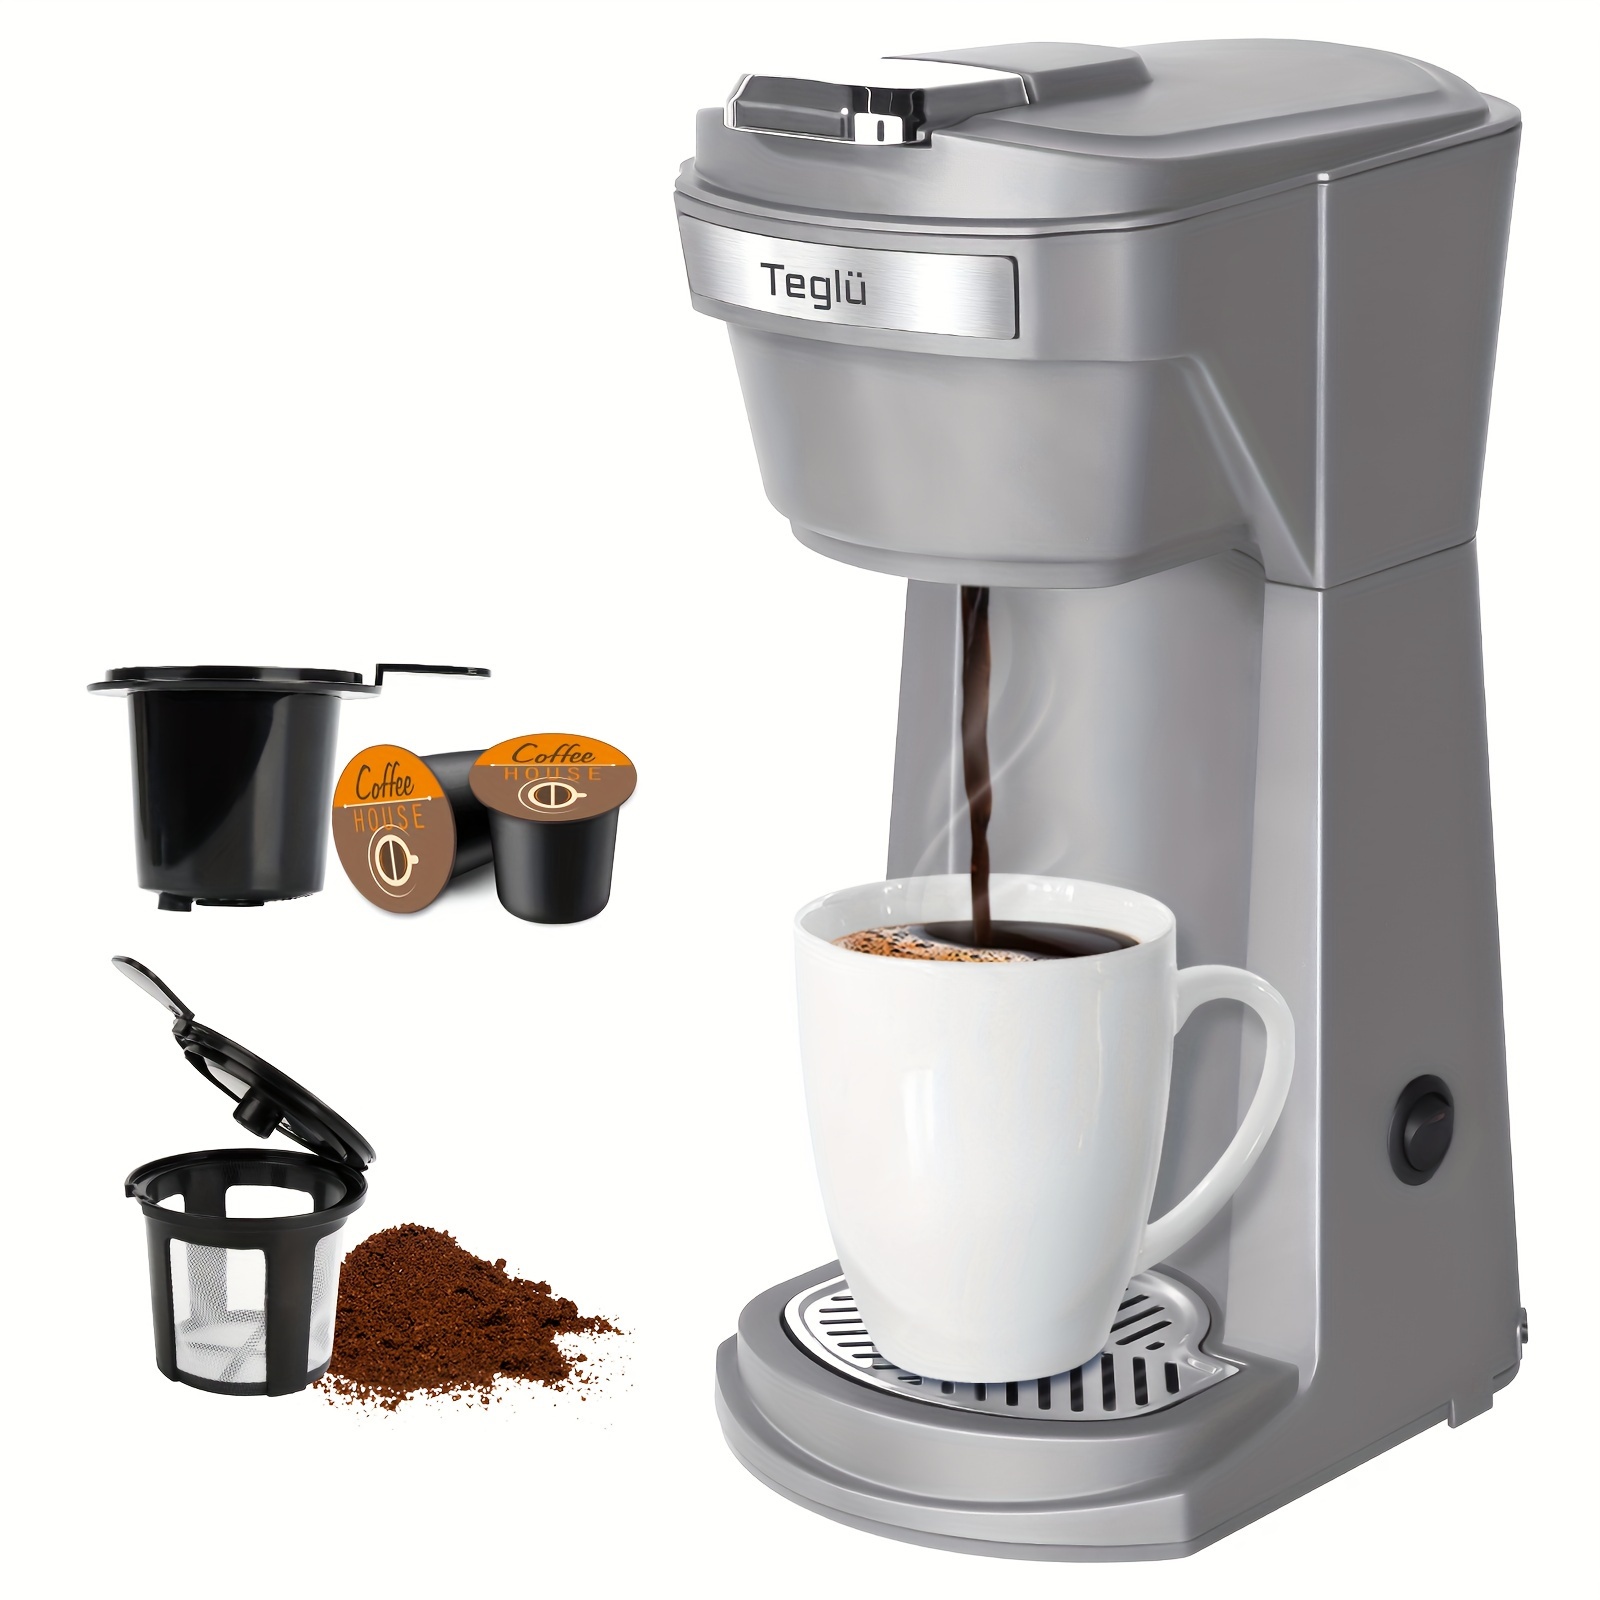 Cápsulas de café: Guía para principiantes - Cafe Espresso